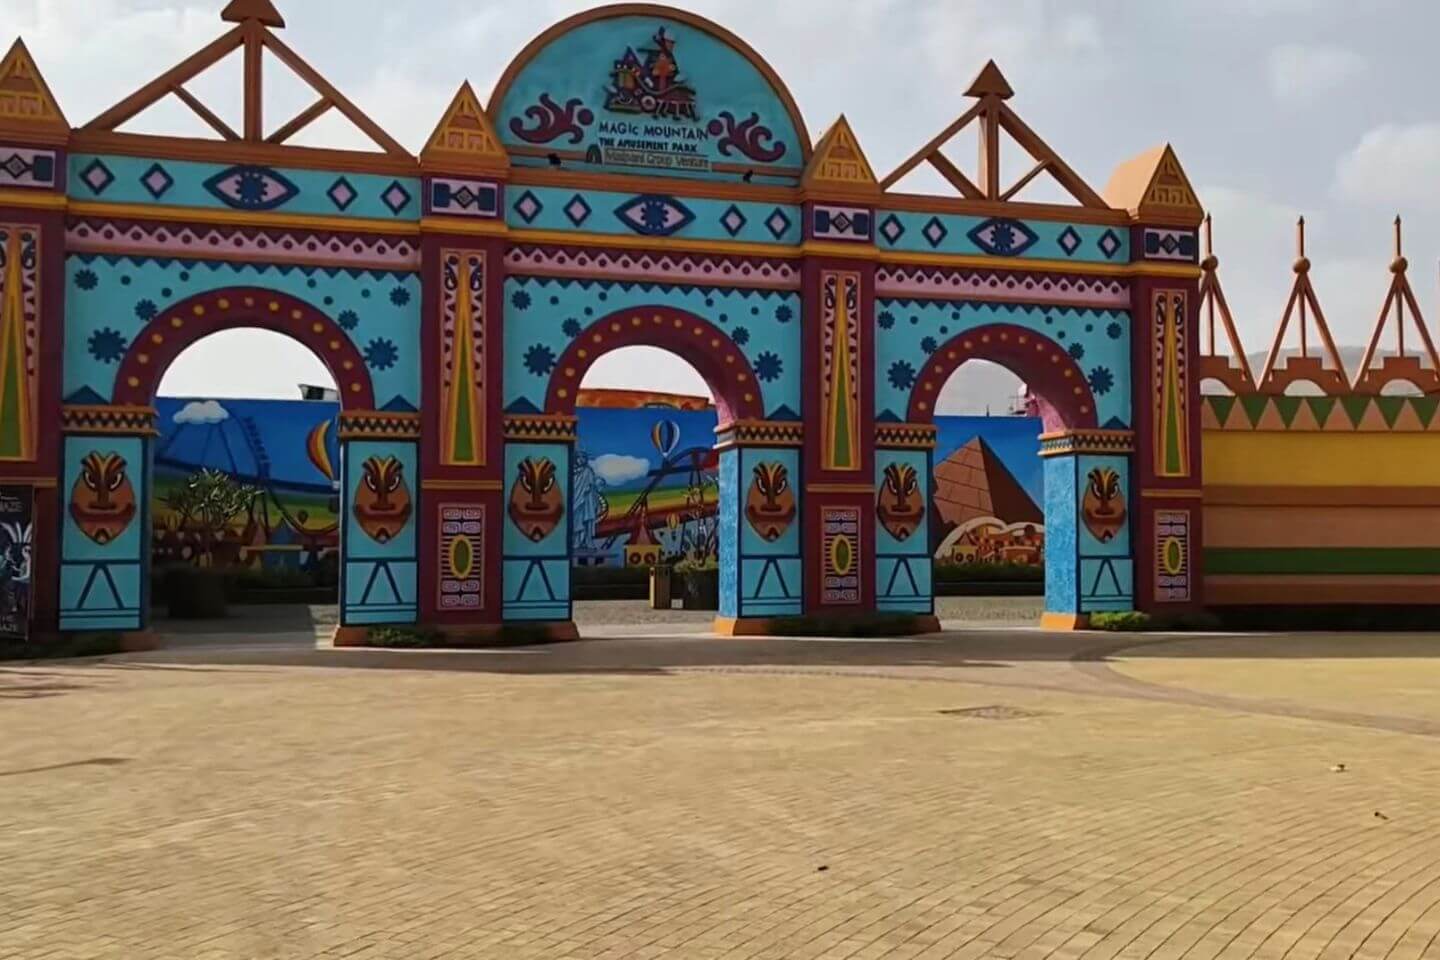 Wet N Joy Water Park and Amusement Park, Amusement and Theme Parks in Pune